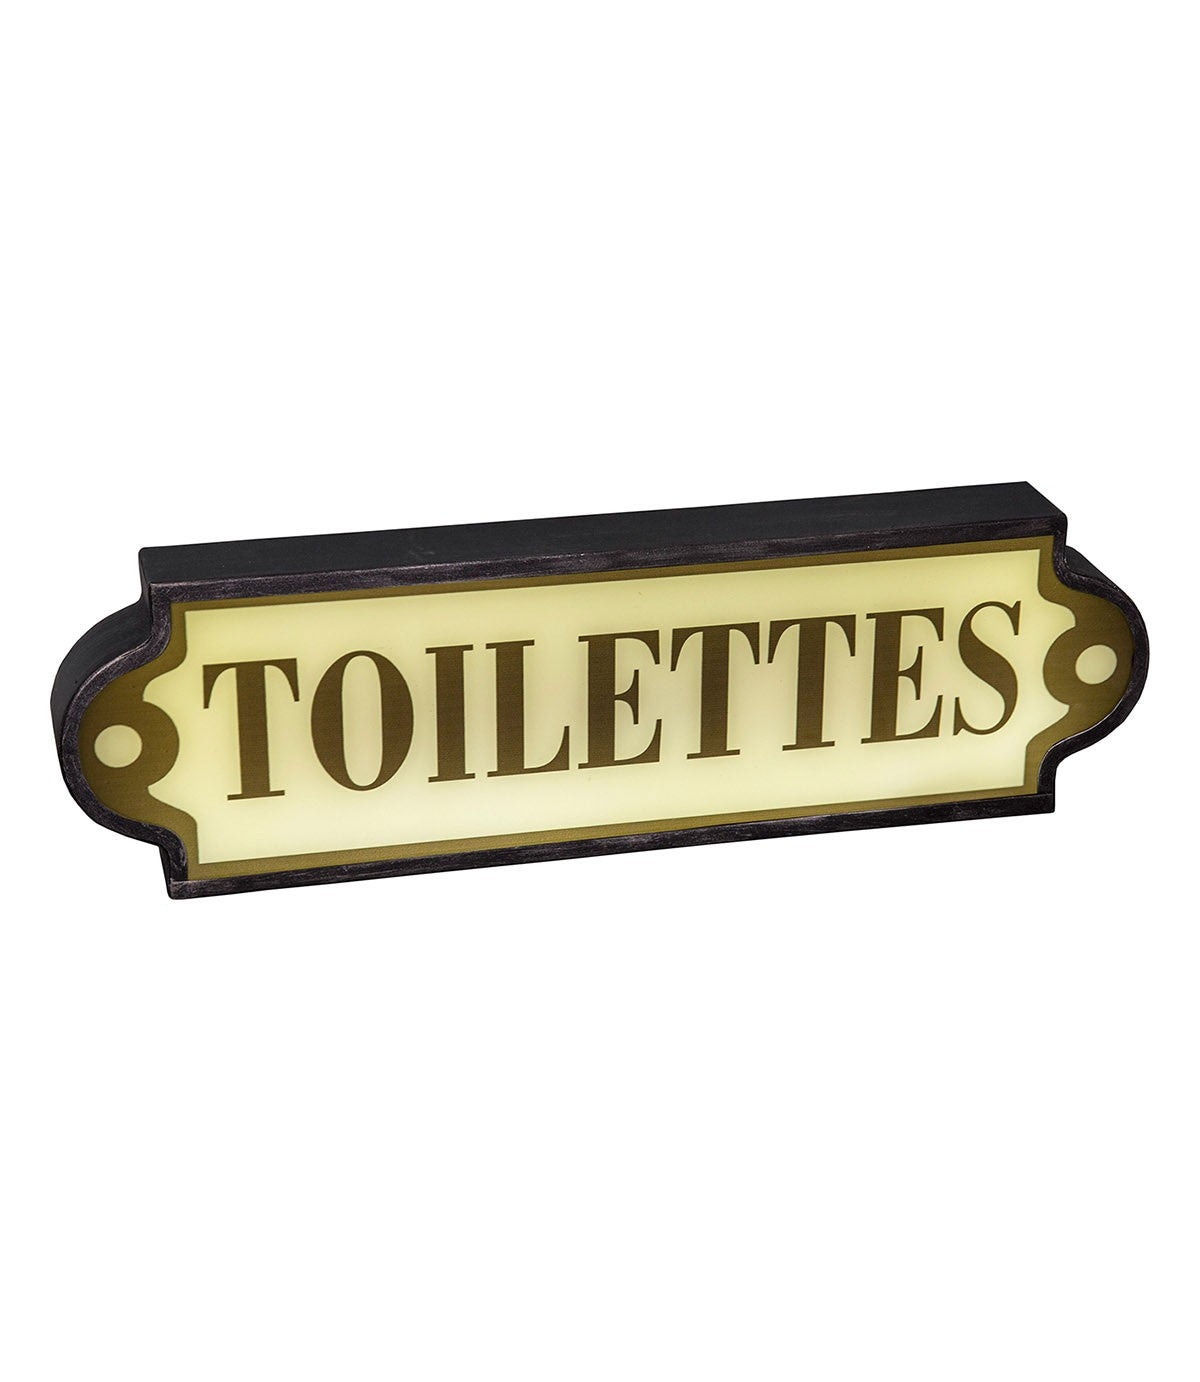 Vintage illuminated sign for Toilet